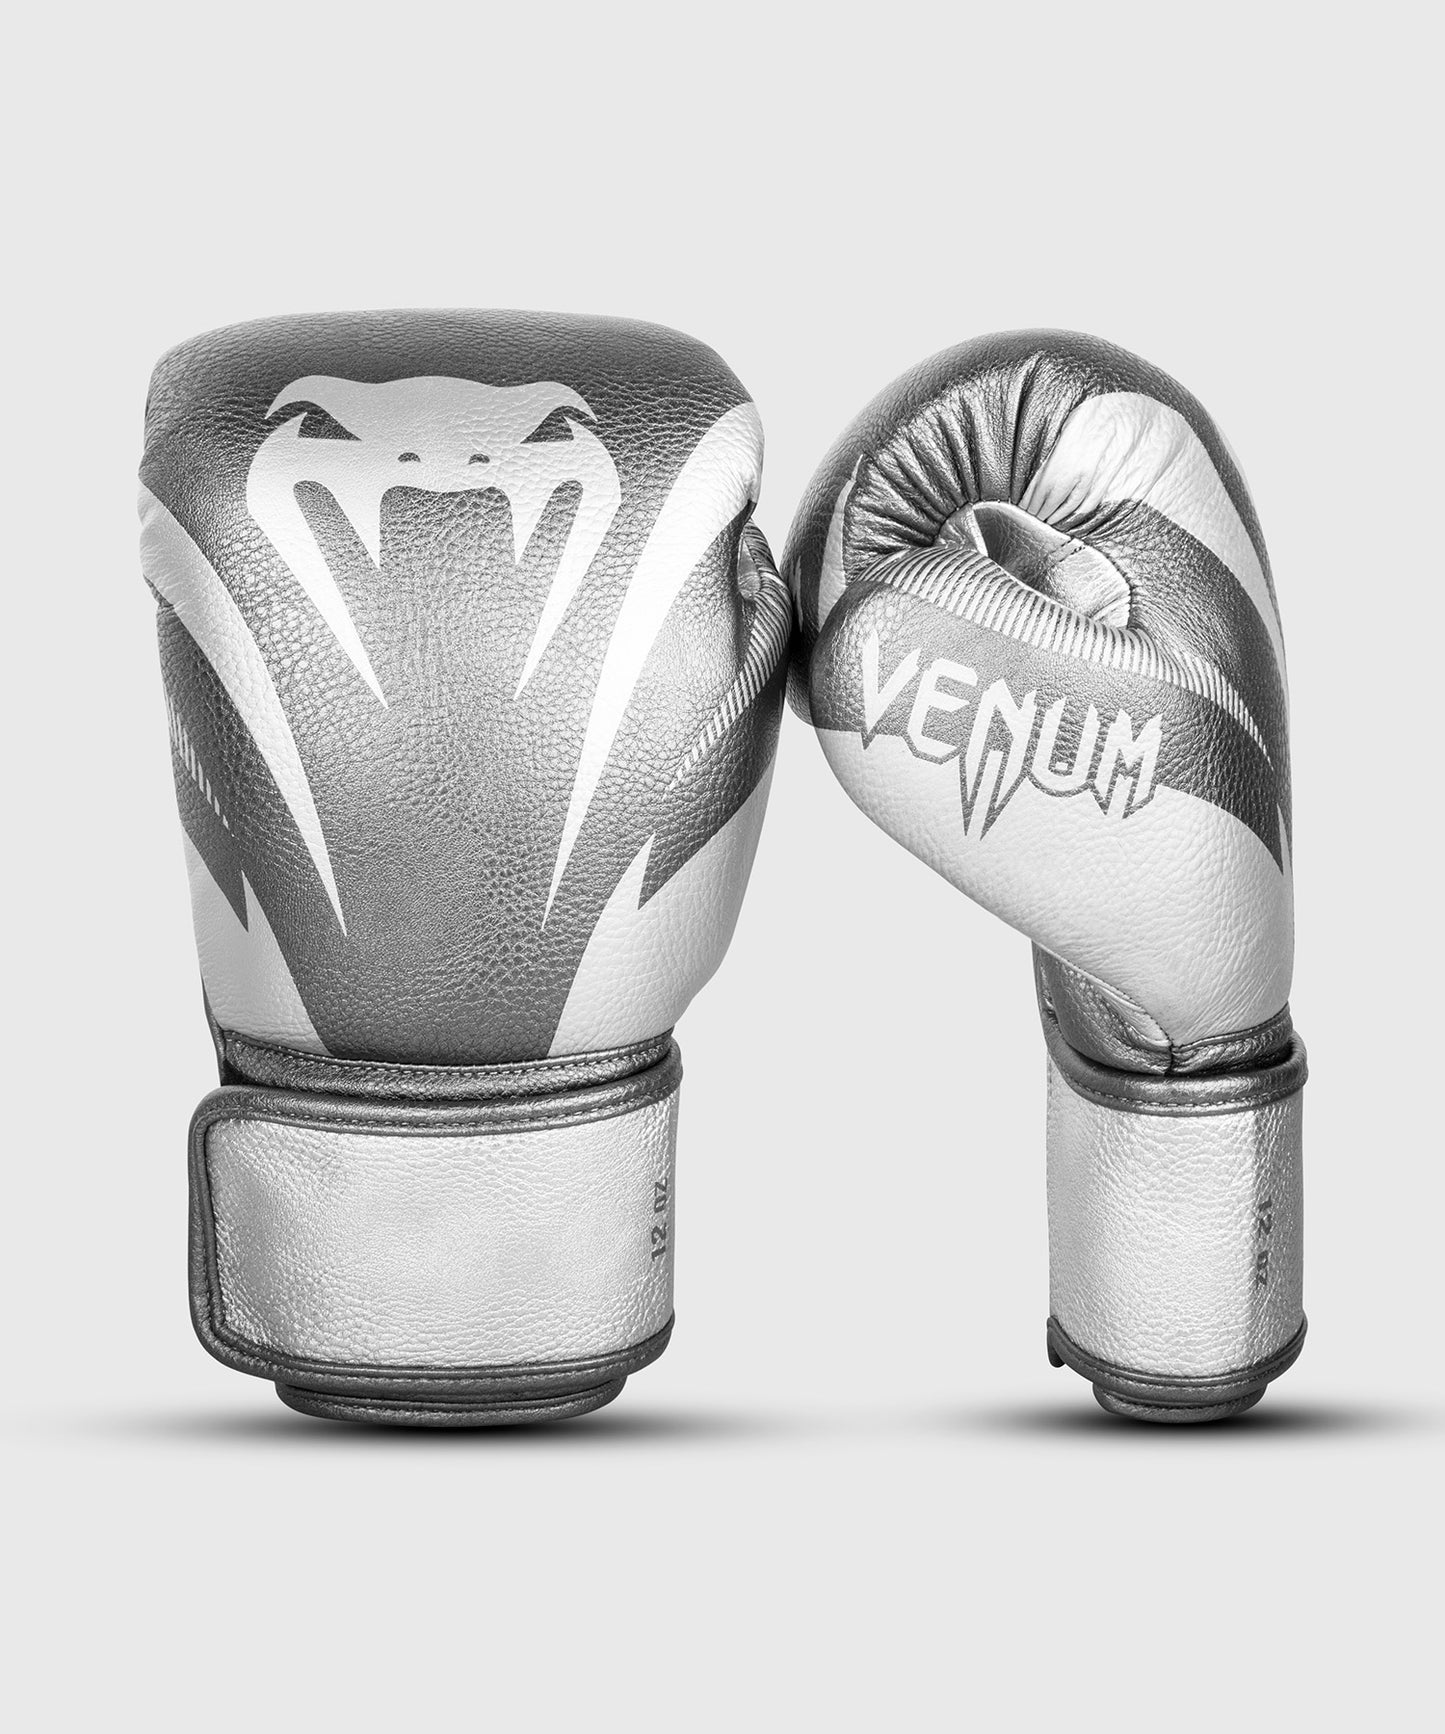 Venum Impact Boxing Gloves - Silver/Silver